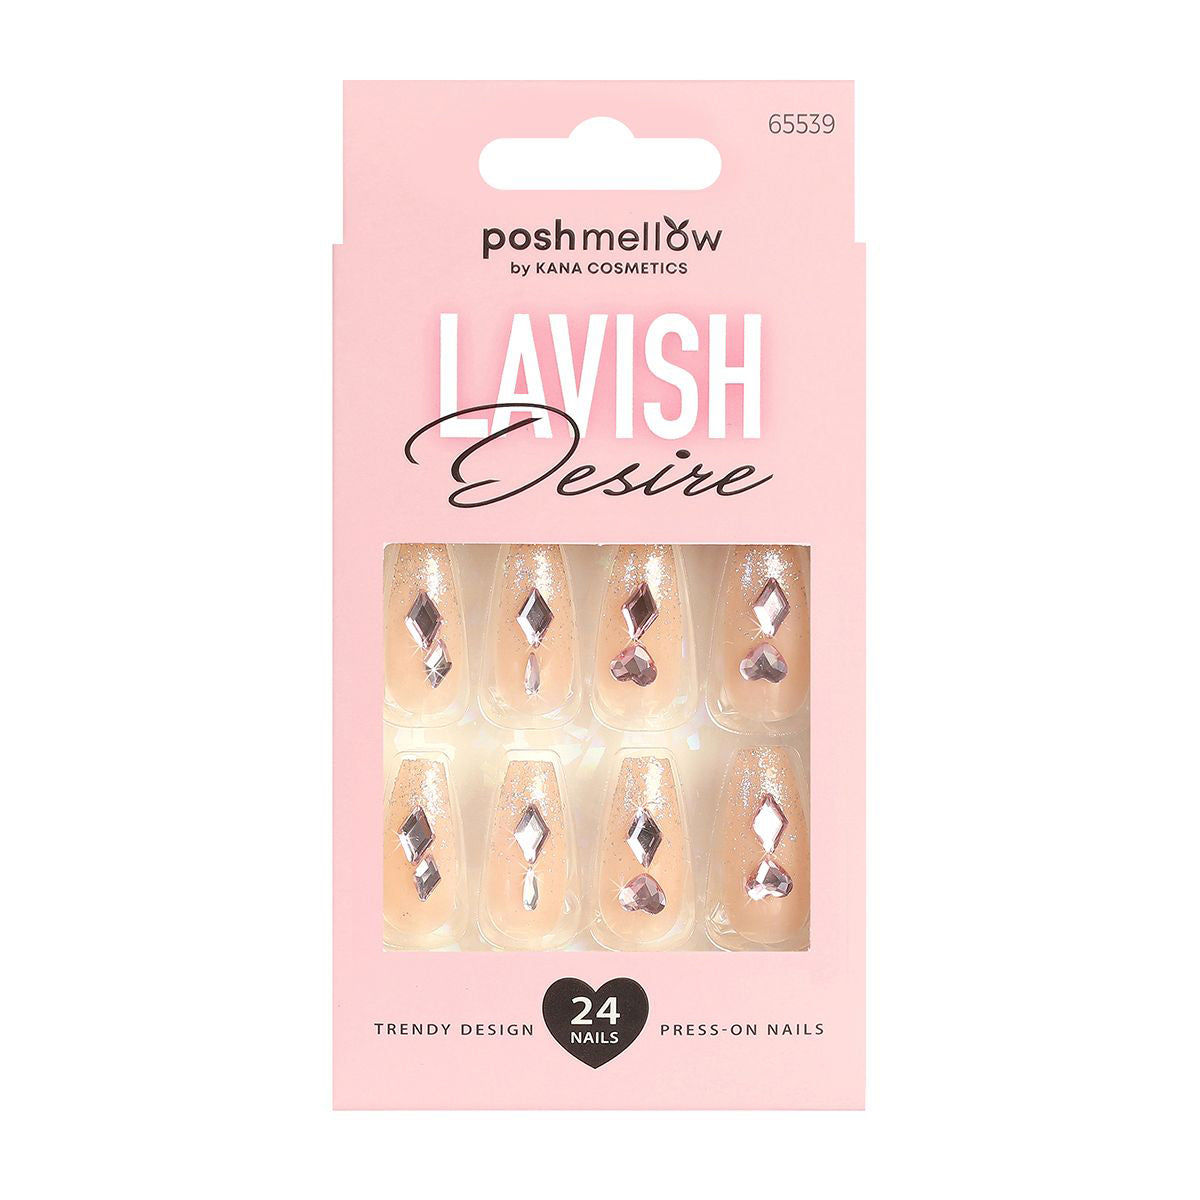 Lavish Desire Design Nails Press-on Nails